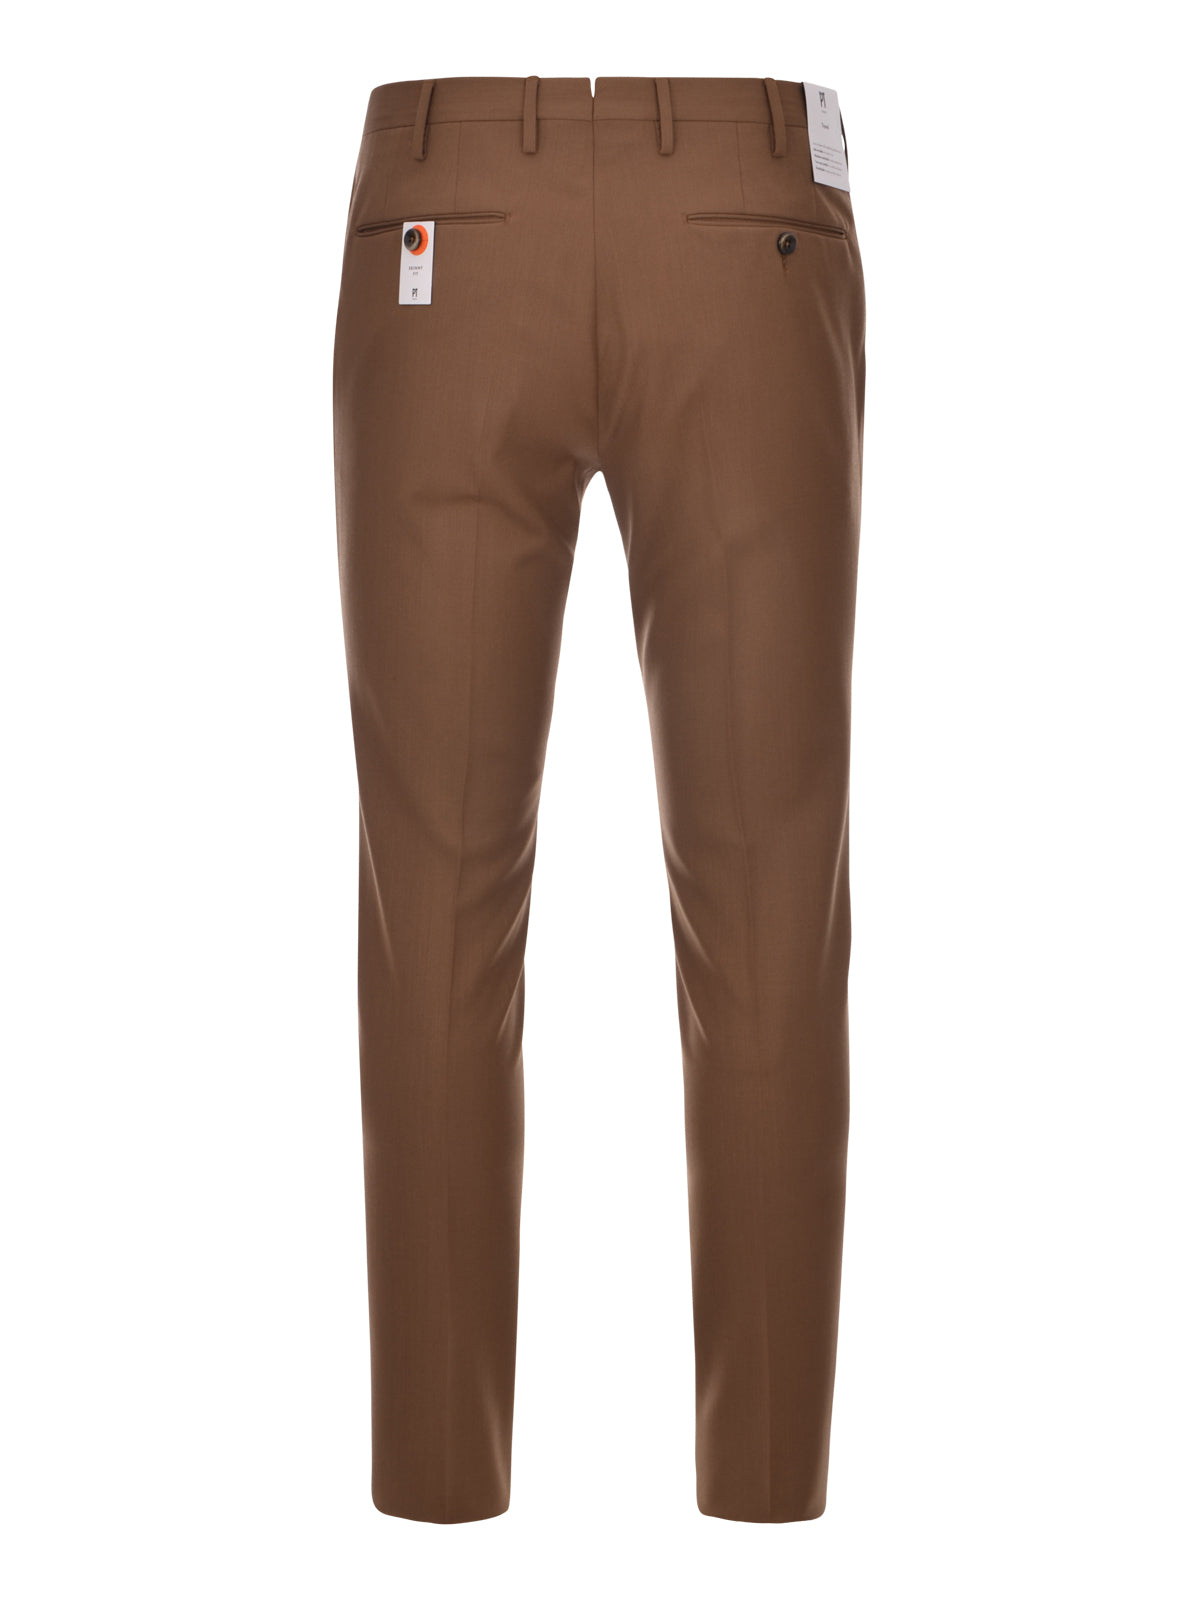 Pt Torino Travel Skinny Fit trousers - KSZEZ00CL1-PO36